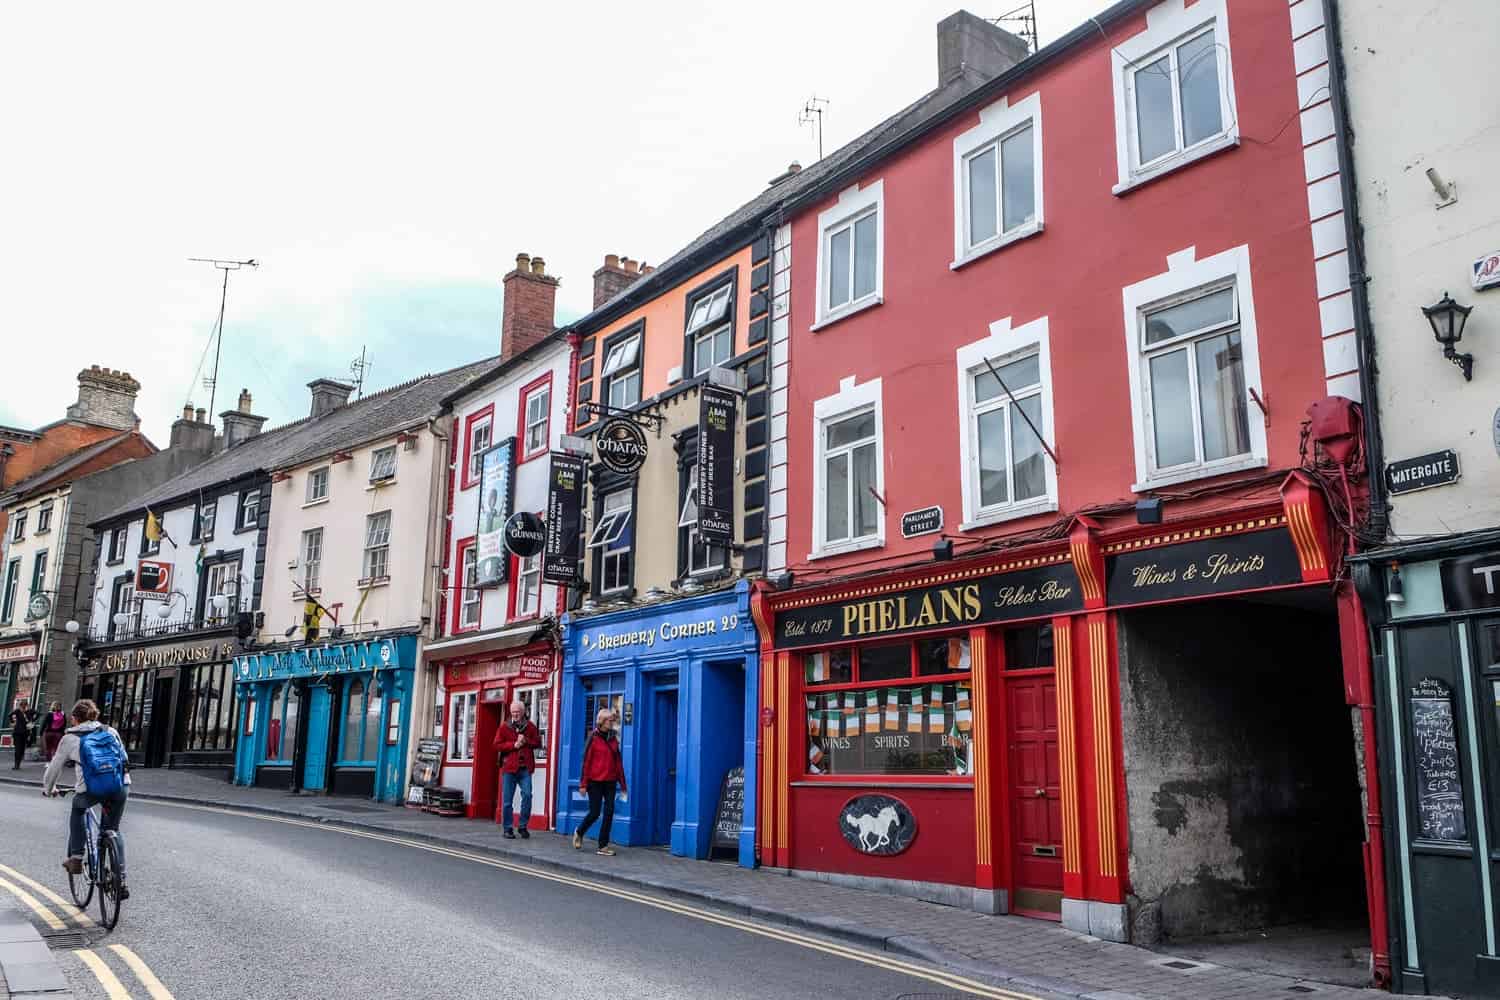 Pub Street in Kilkenny, Ireland's Ancient East